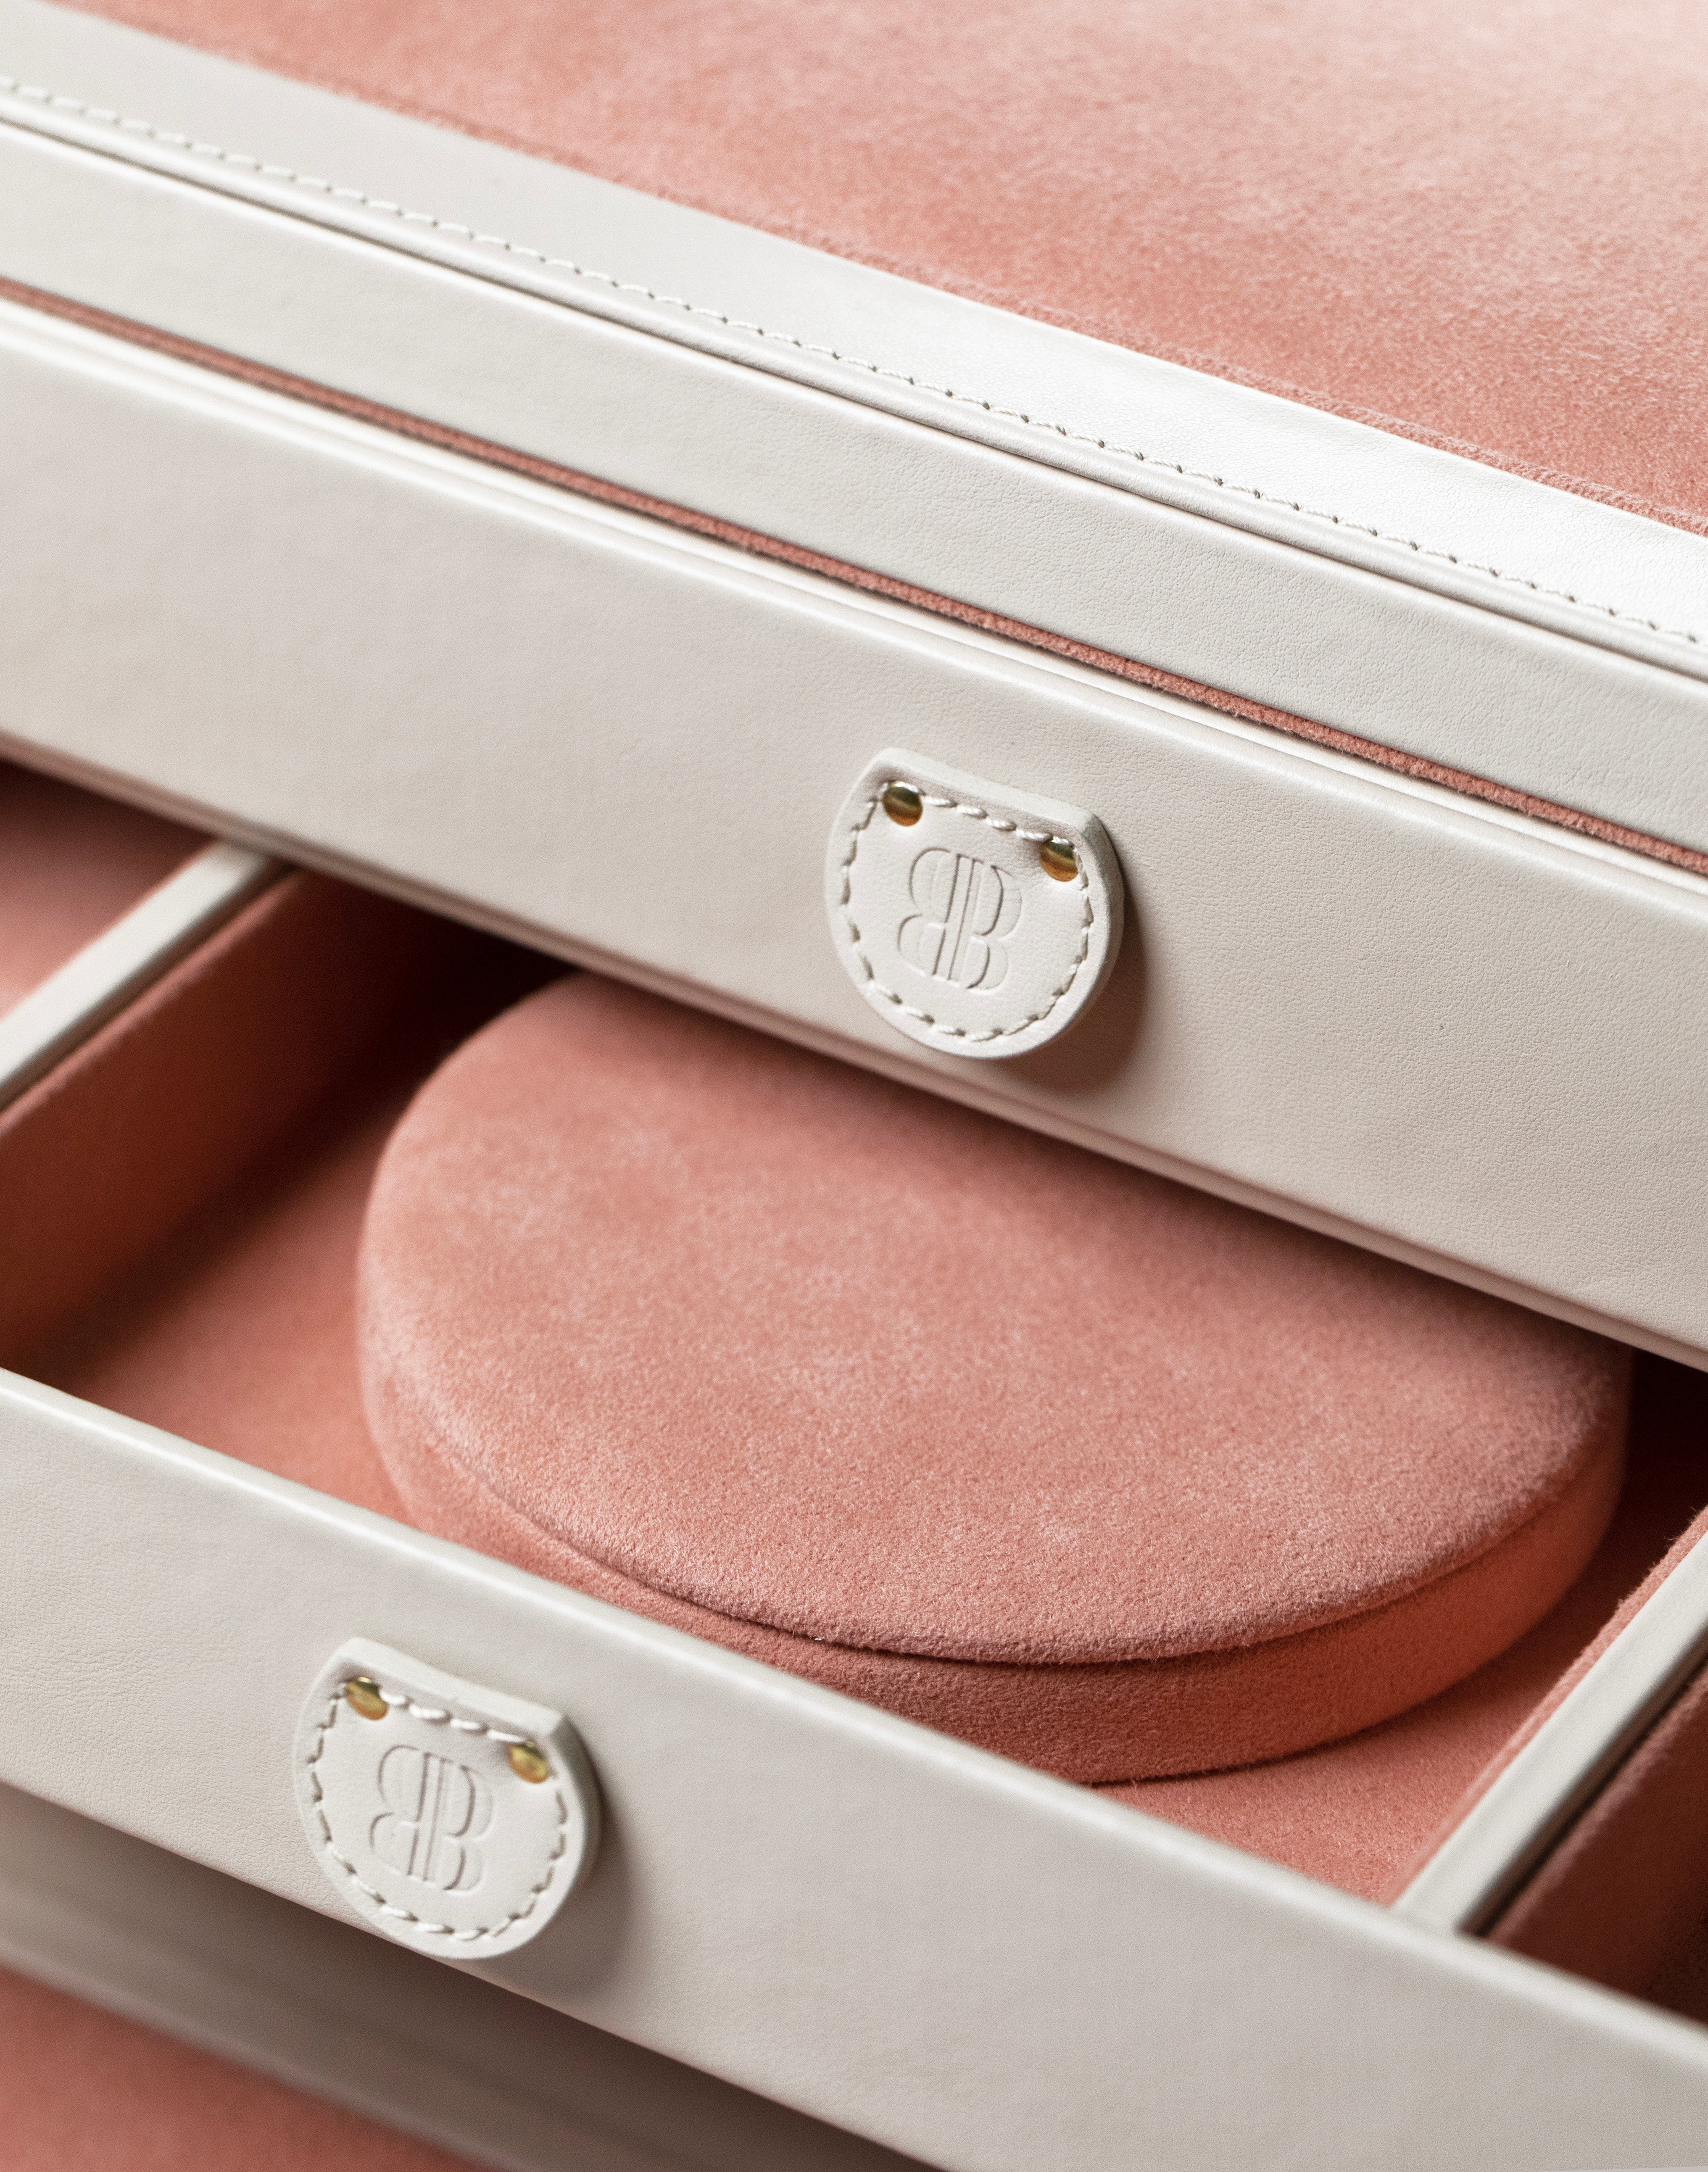 Jewelry Holder Bernardini Milano made of pink leather and alcantara - details